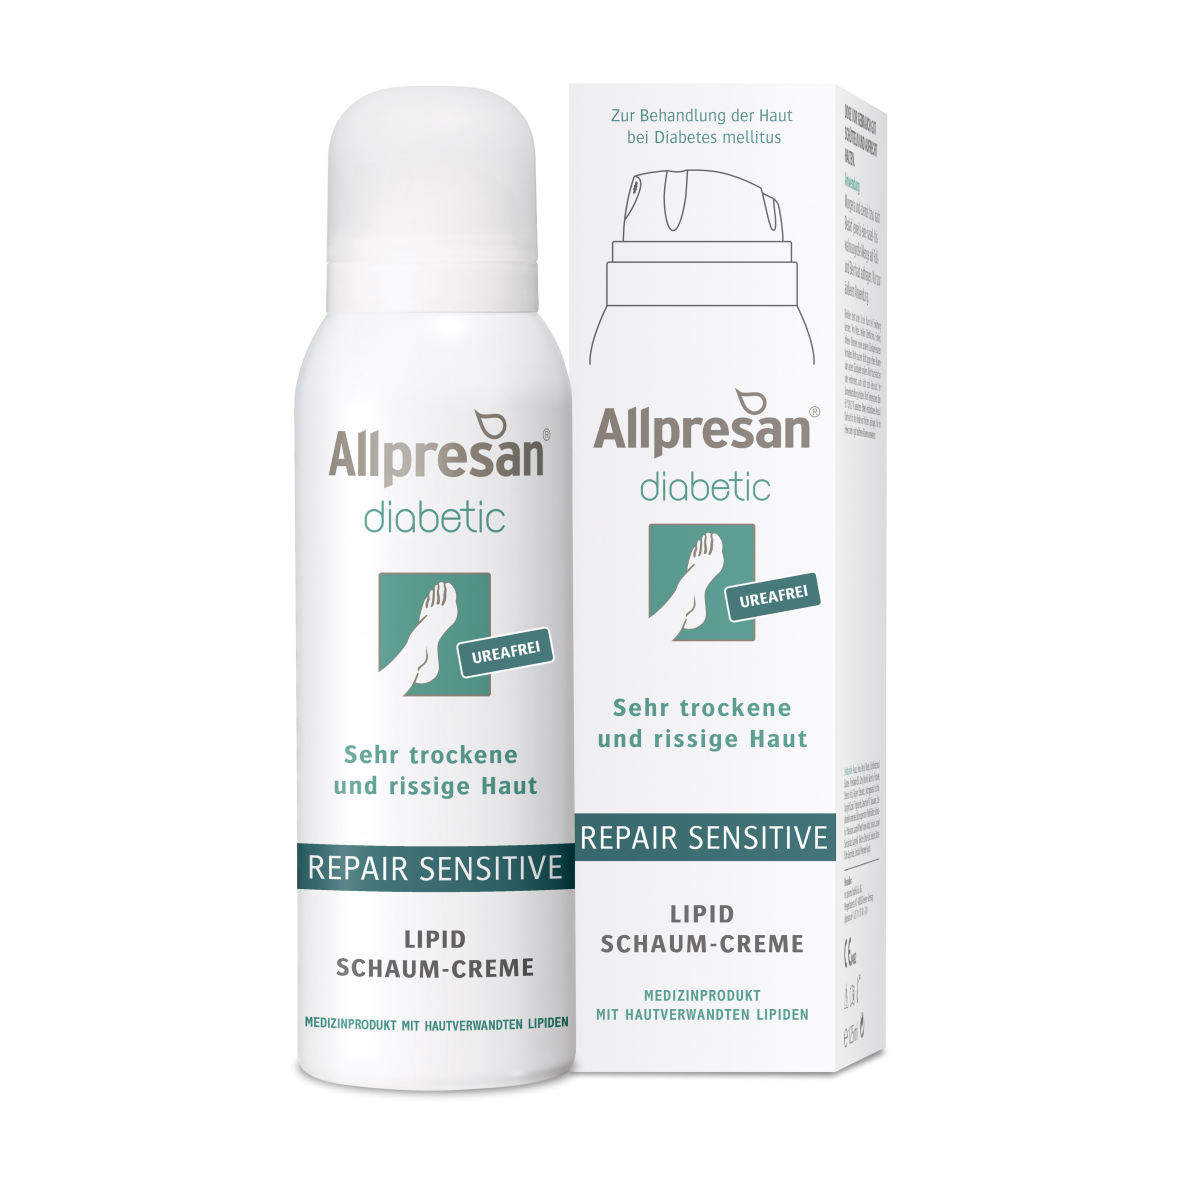 Allpresan diabetic Lipid Schaum-Creme REPAIR Sensitive 125ml